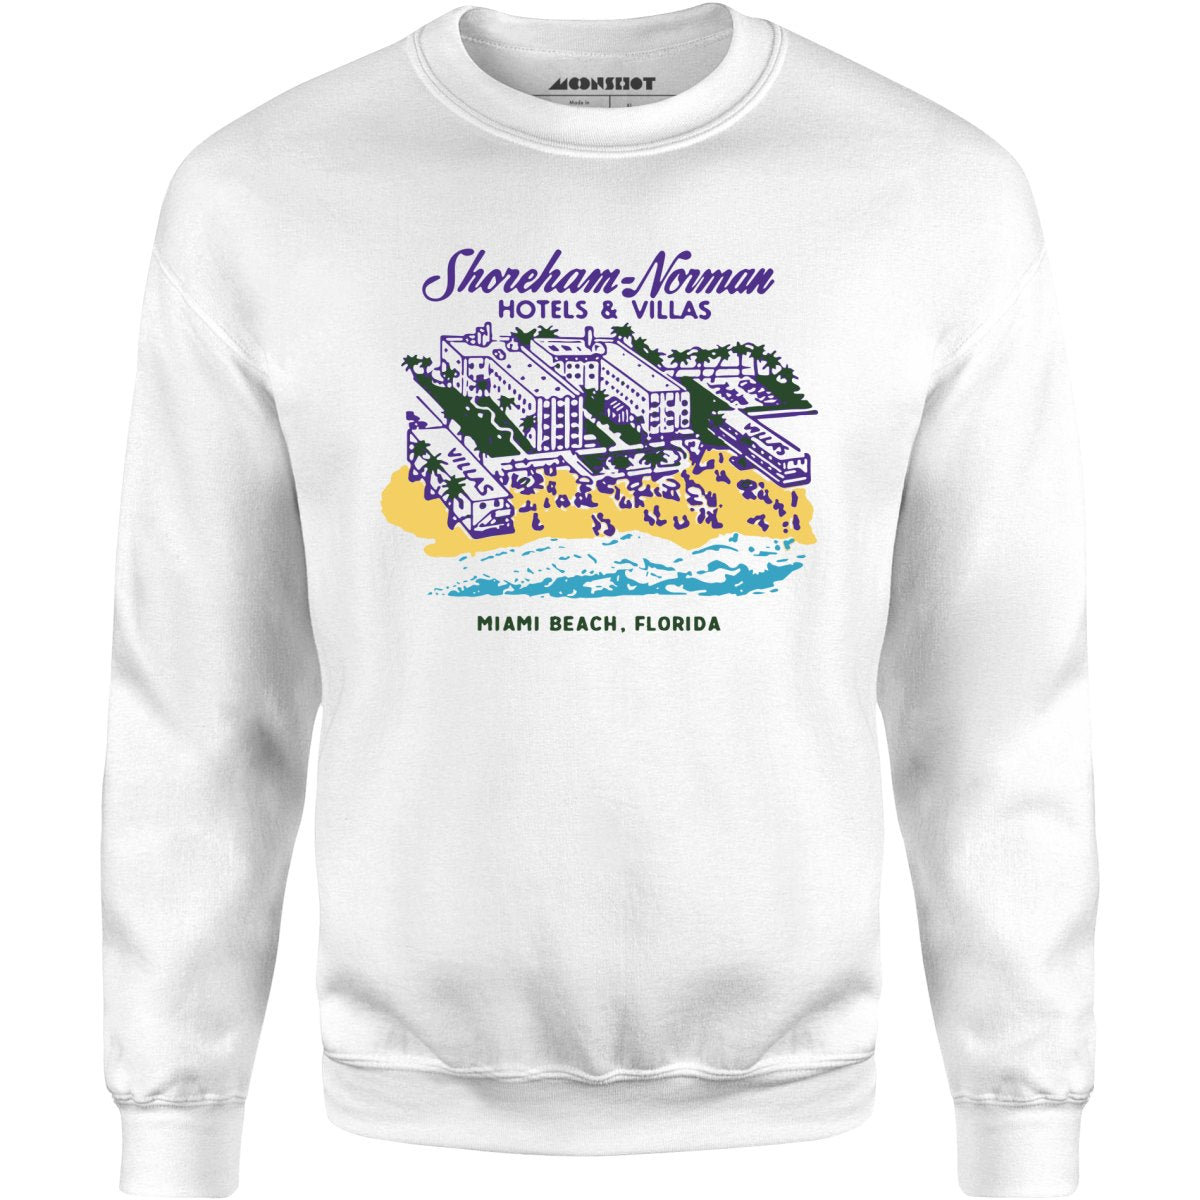 Shoreham Norman Hotels & Villas - Miami, FL - Vintage Hotel - Unisex Sweatshirt